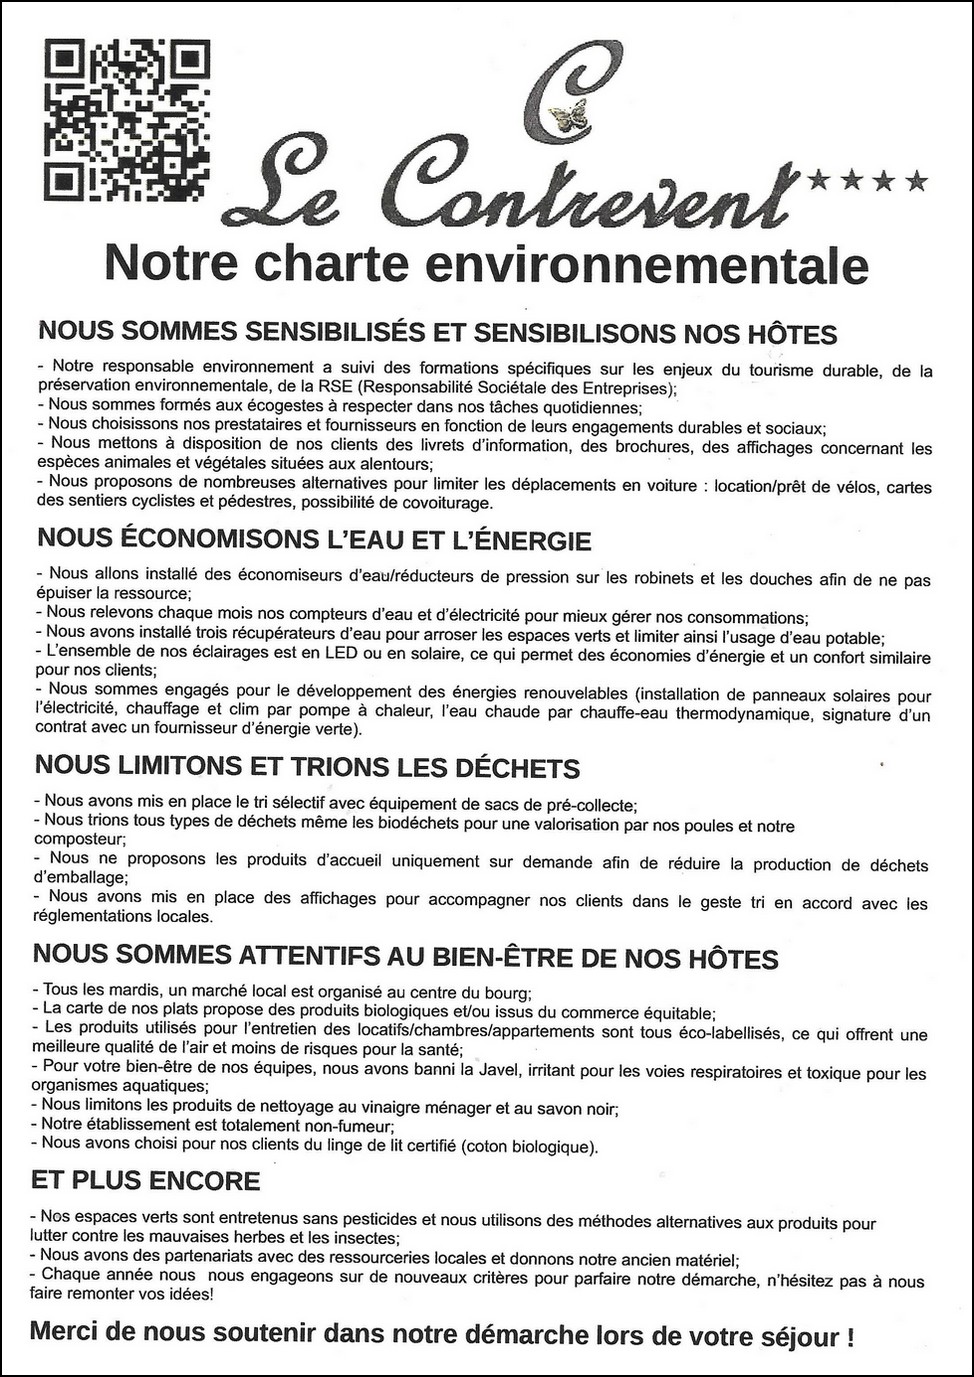 Notre charte environnementale